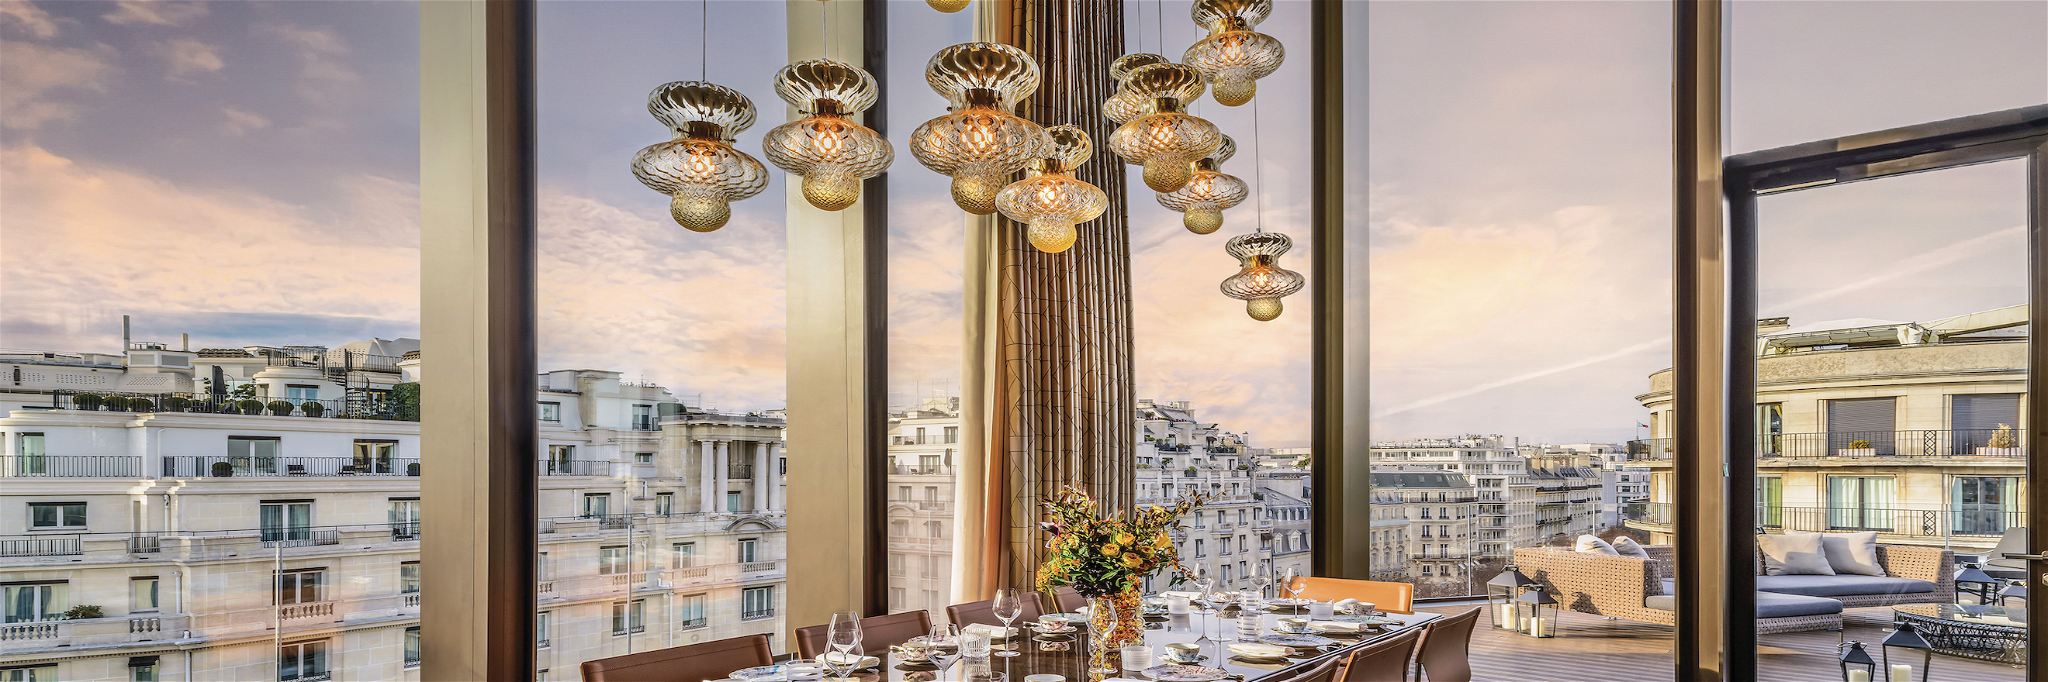 Luxus pur: Das Penthouse des neuen »Bvlgari Hotels Paris«